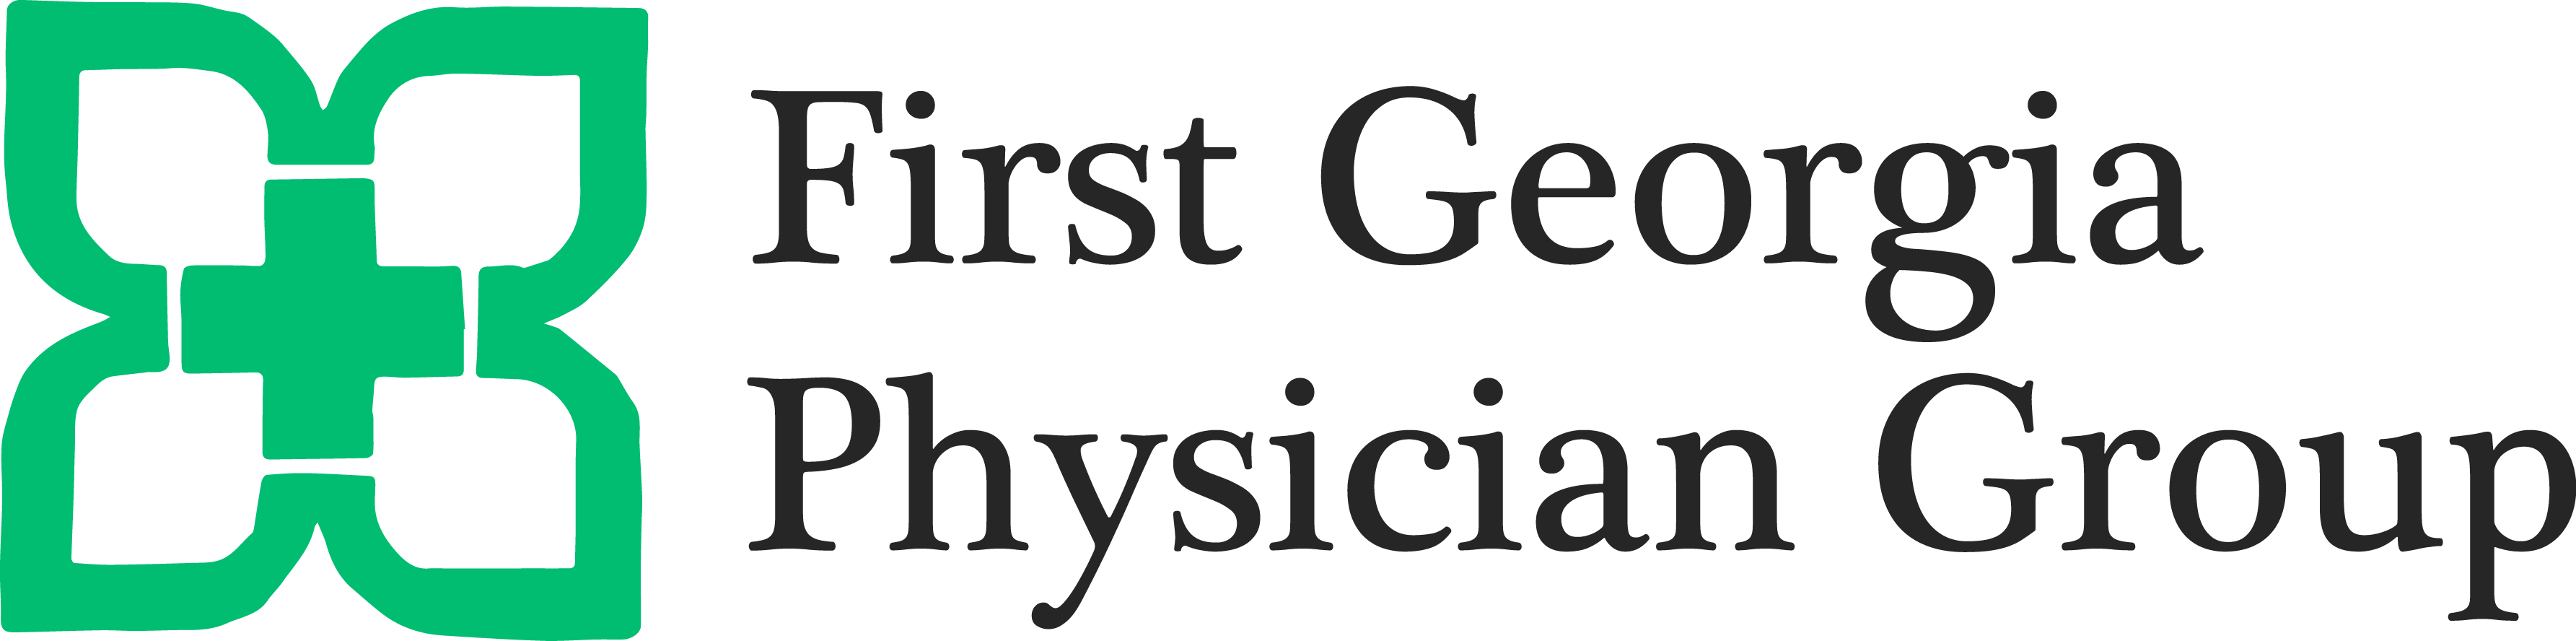 3. First Georgia Physician Group (Purple)